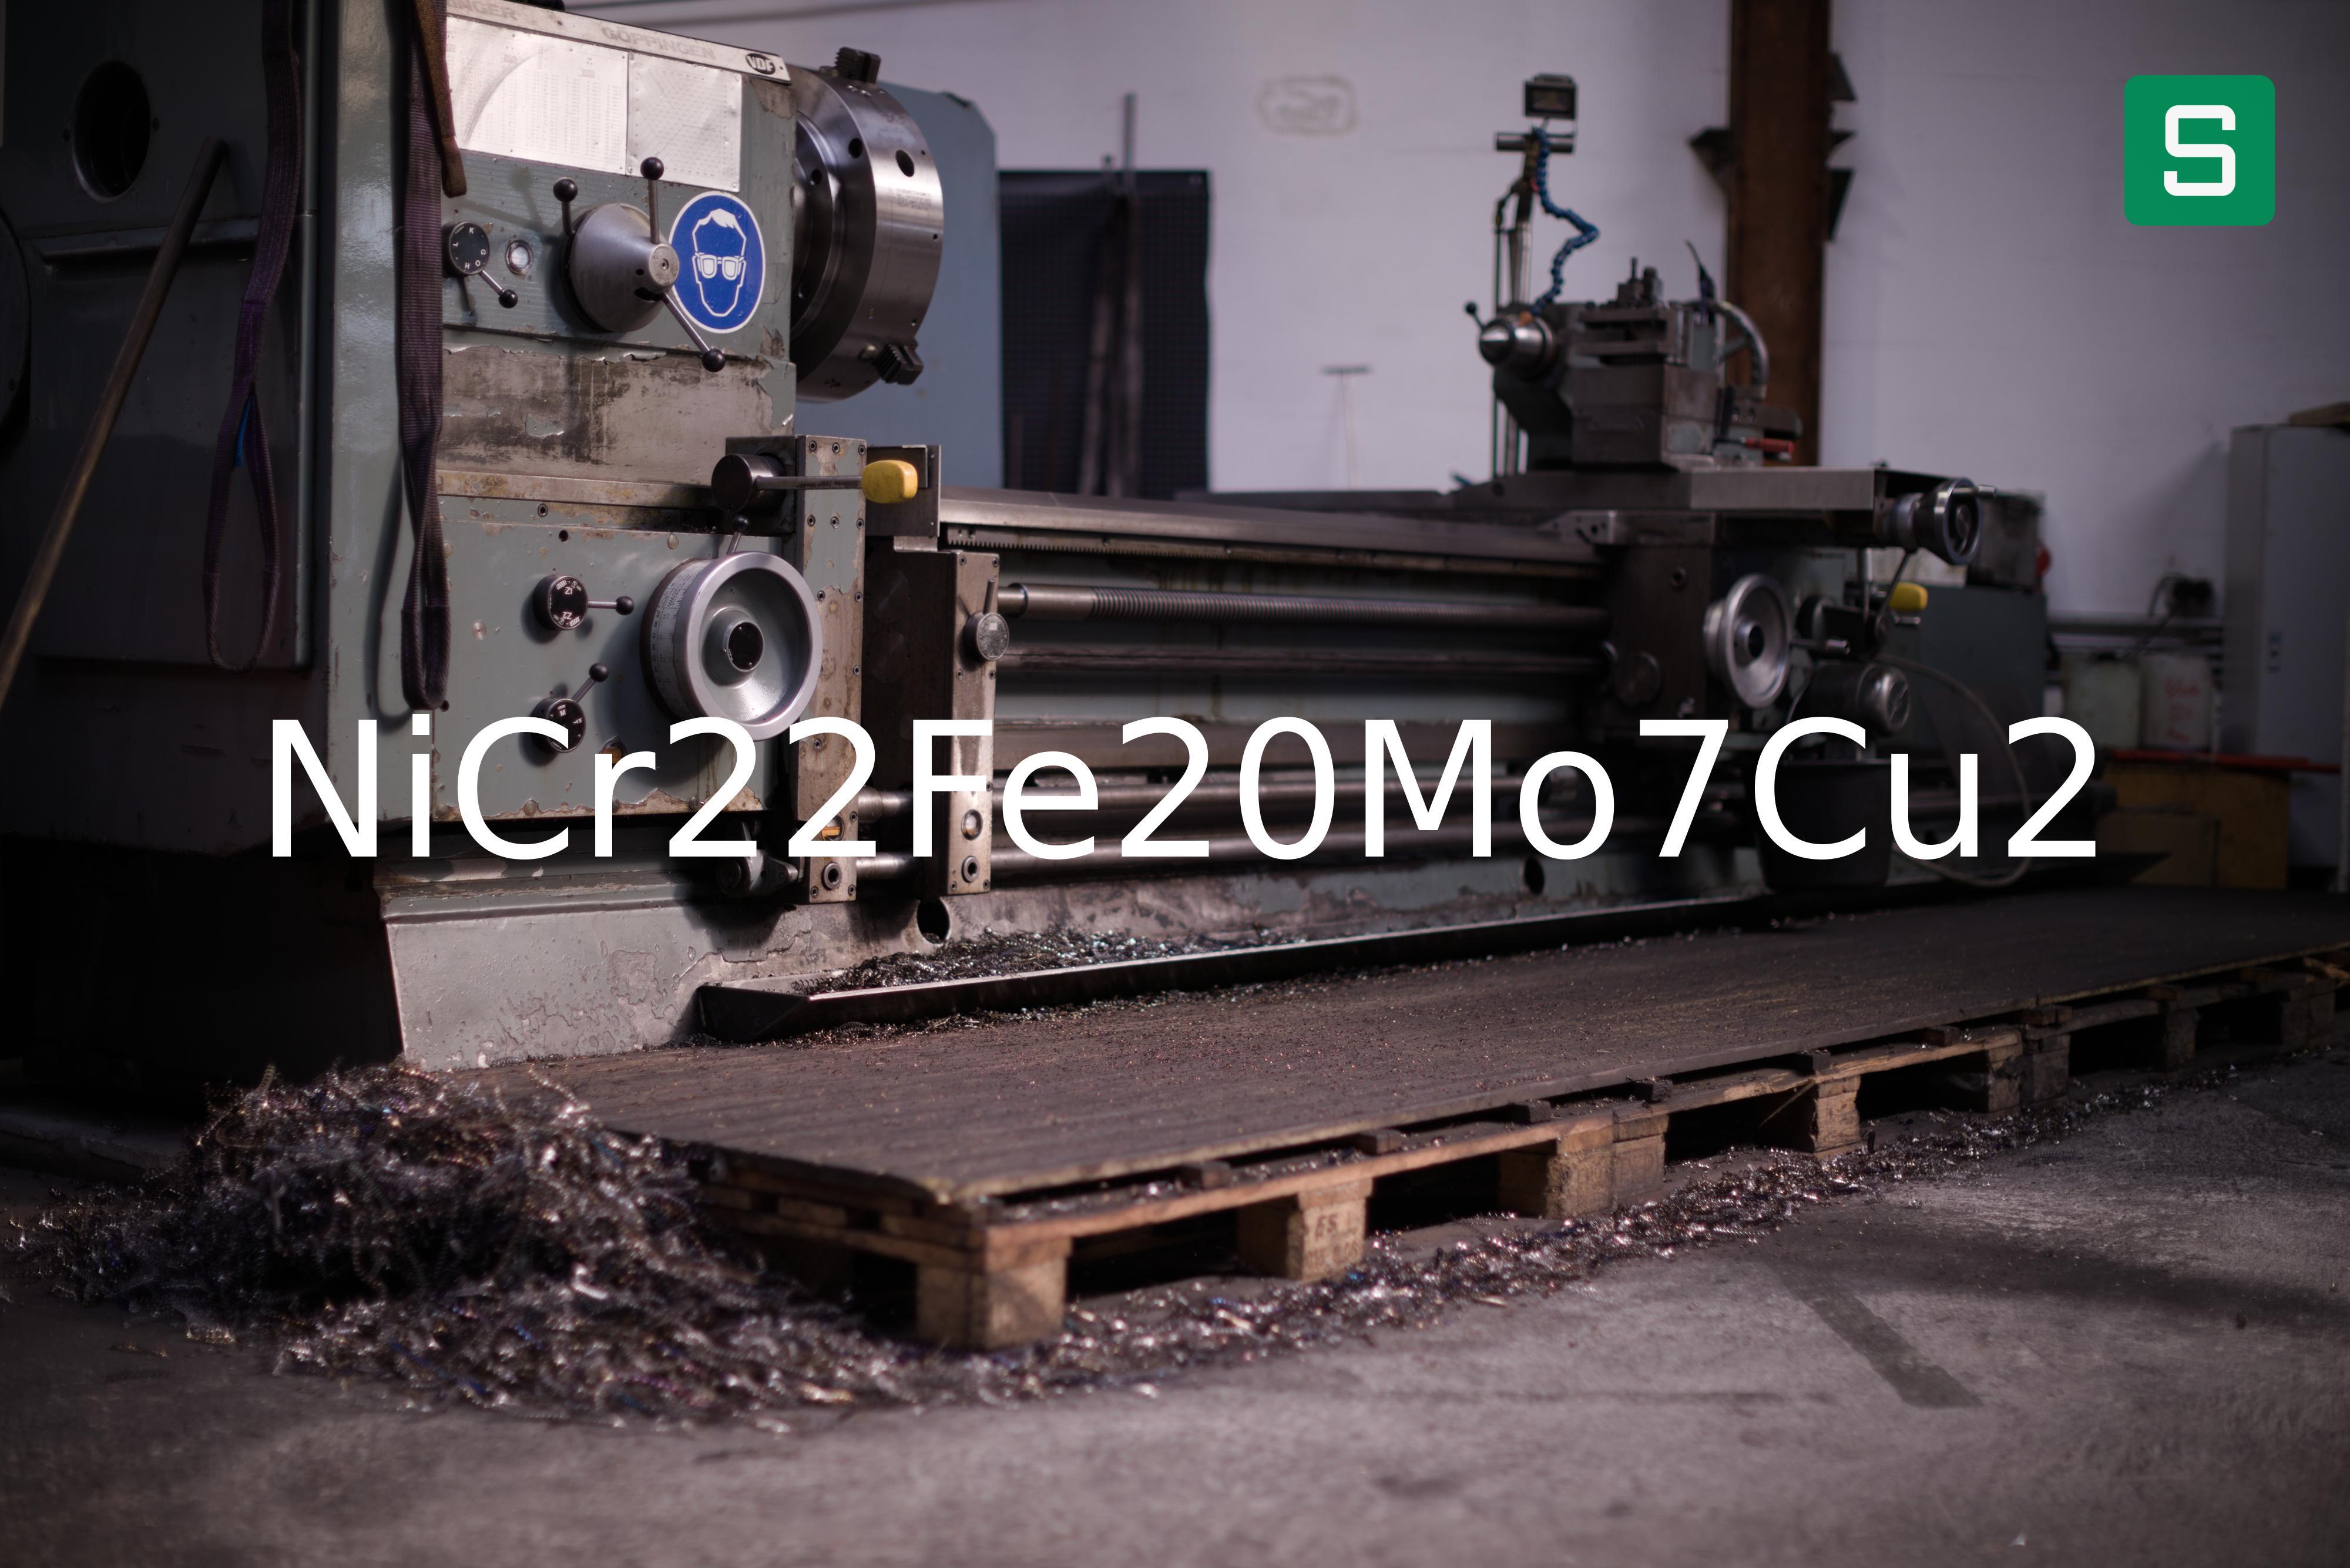 Steel Material: NiCr22Fe20Mo7Cu2